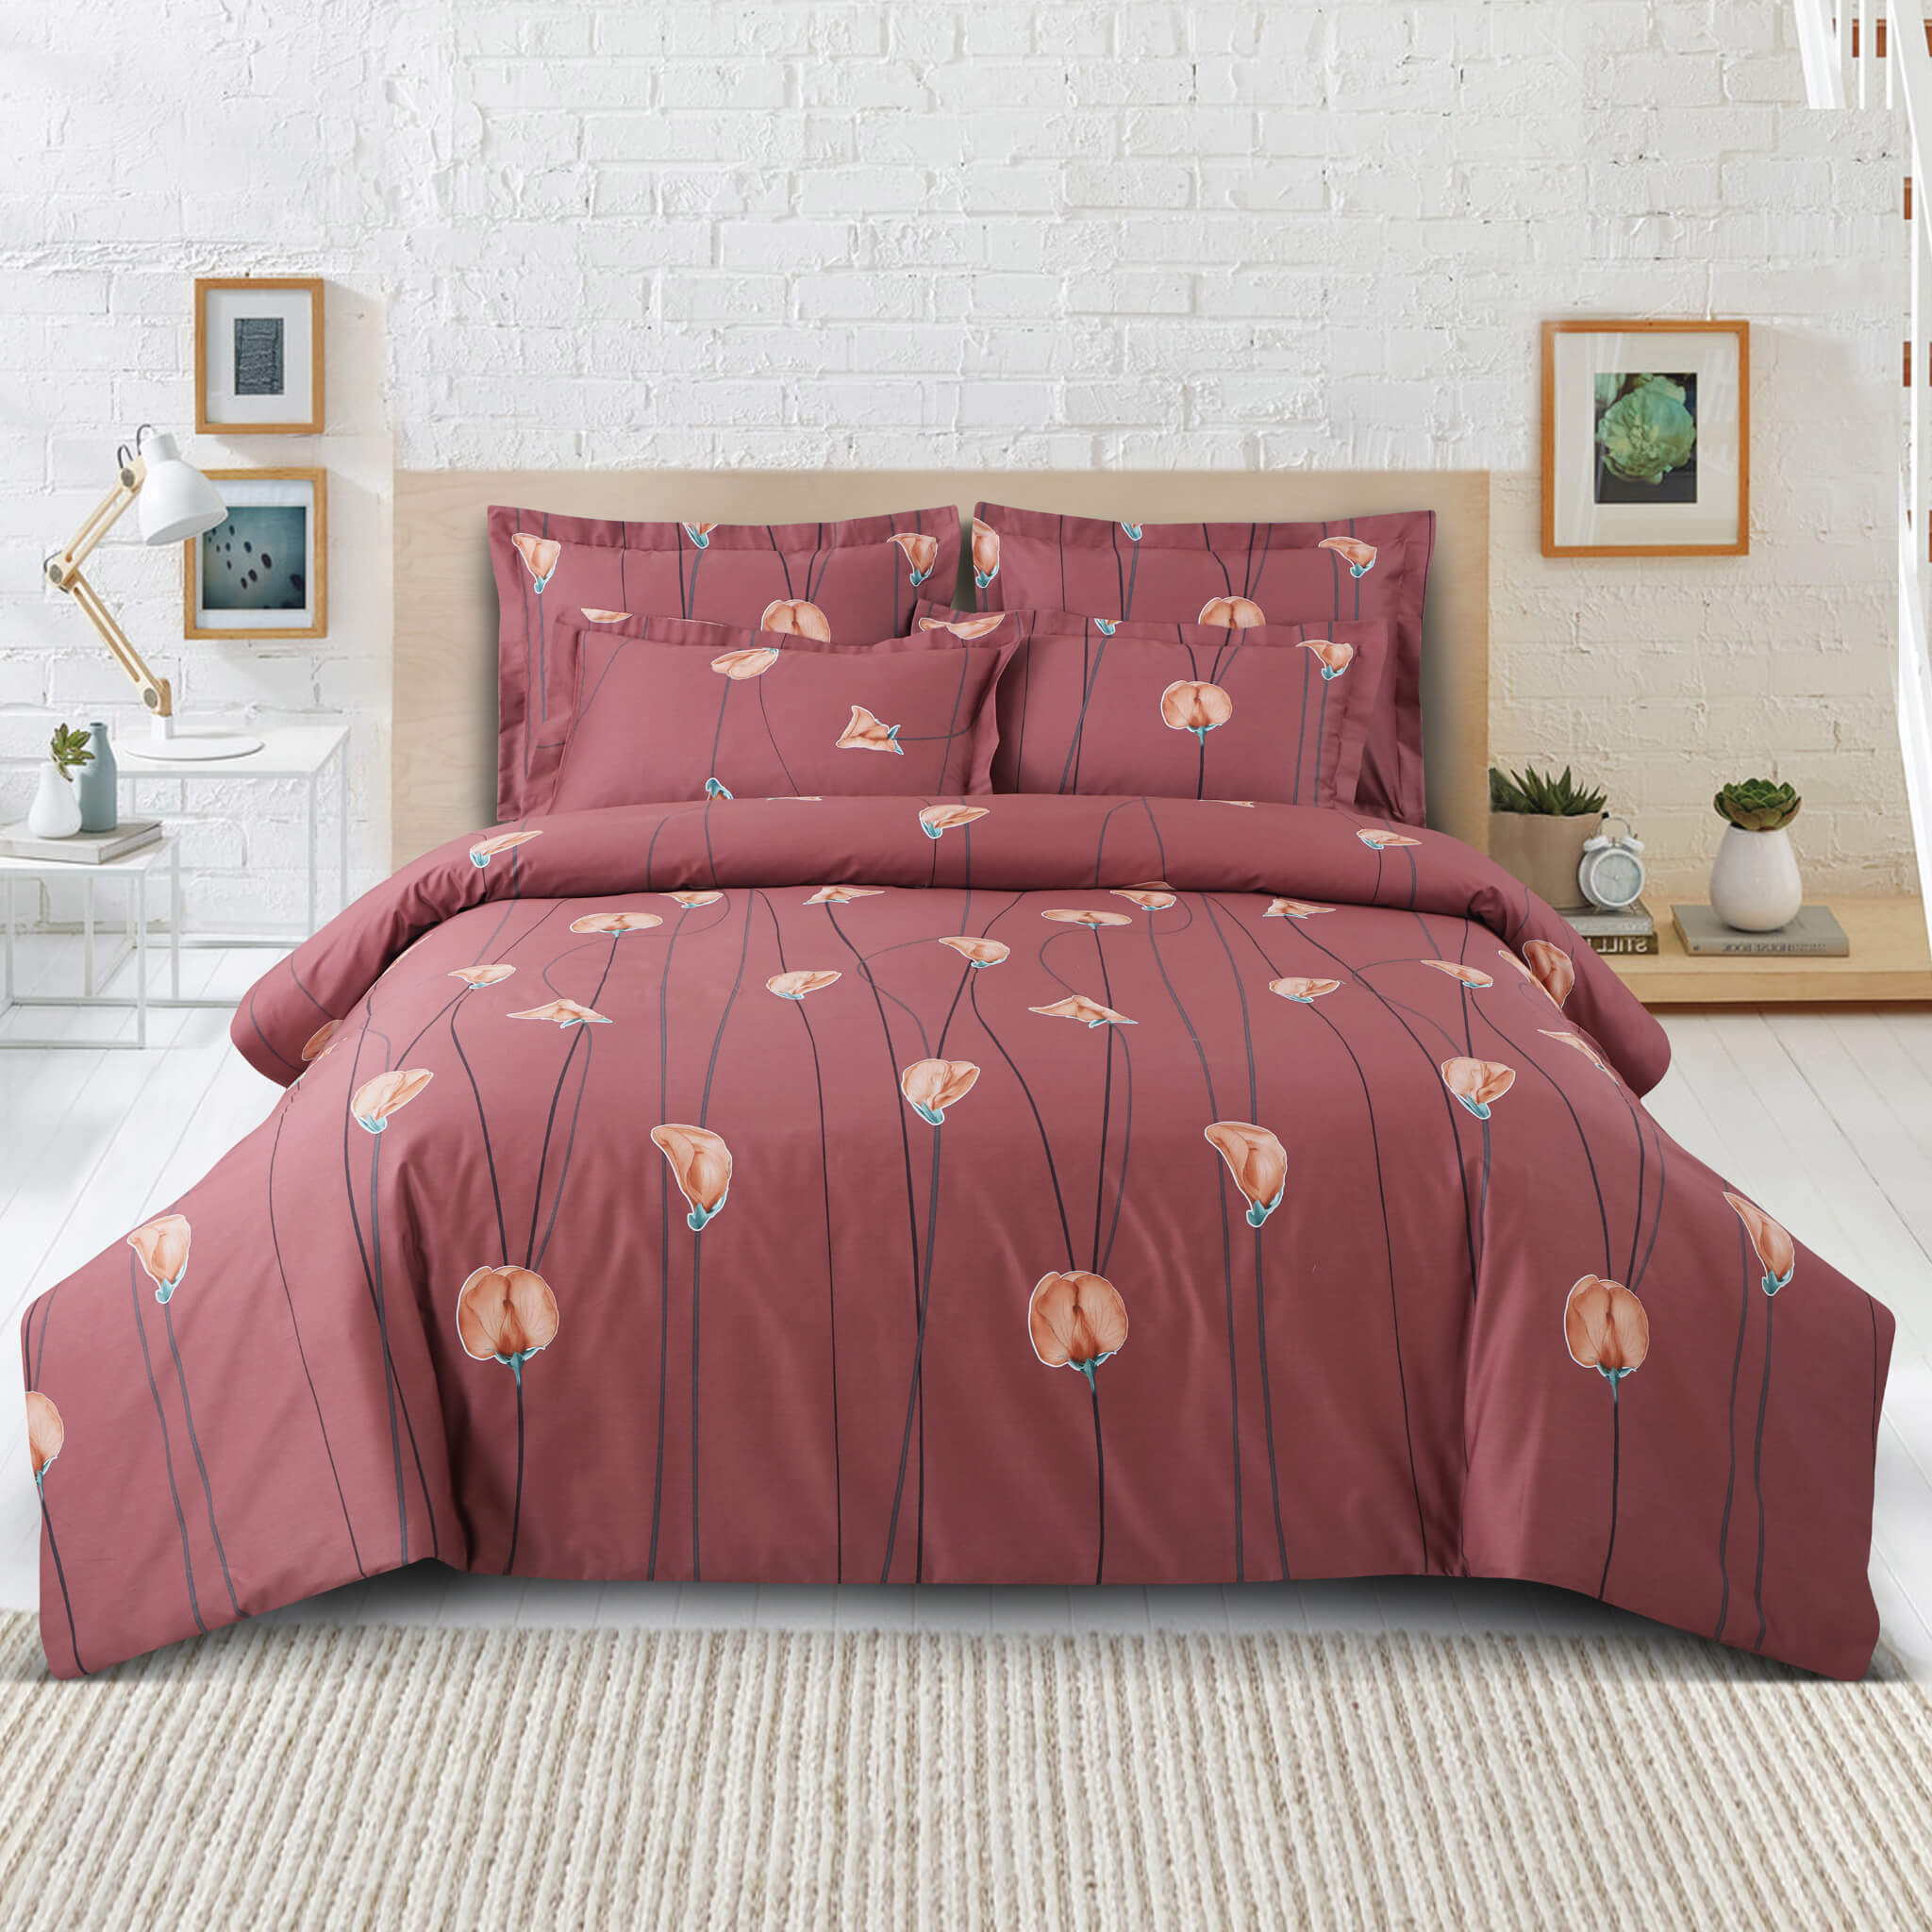 Malako Royale XL Red Botanic 100% Cotton King Size Bed Sheet/Bedding Set - MALAKO